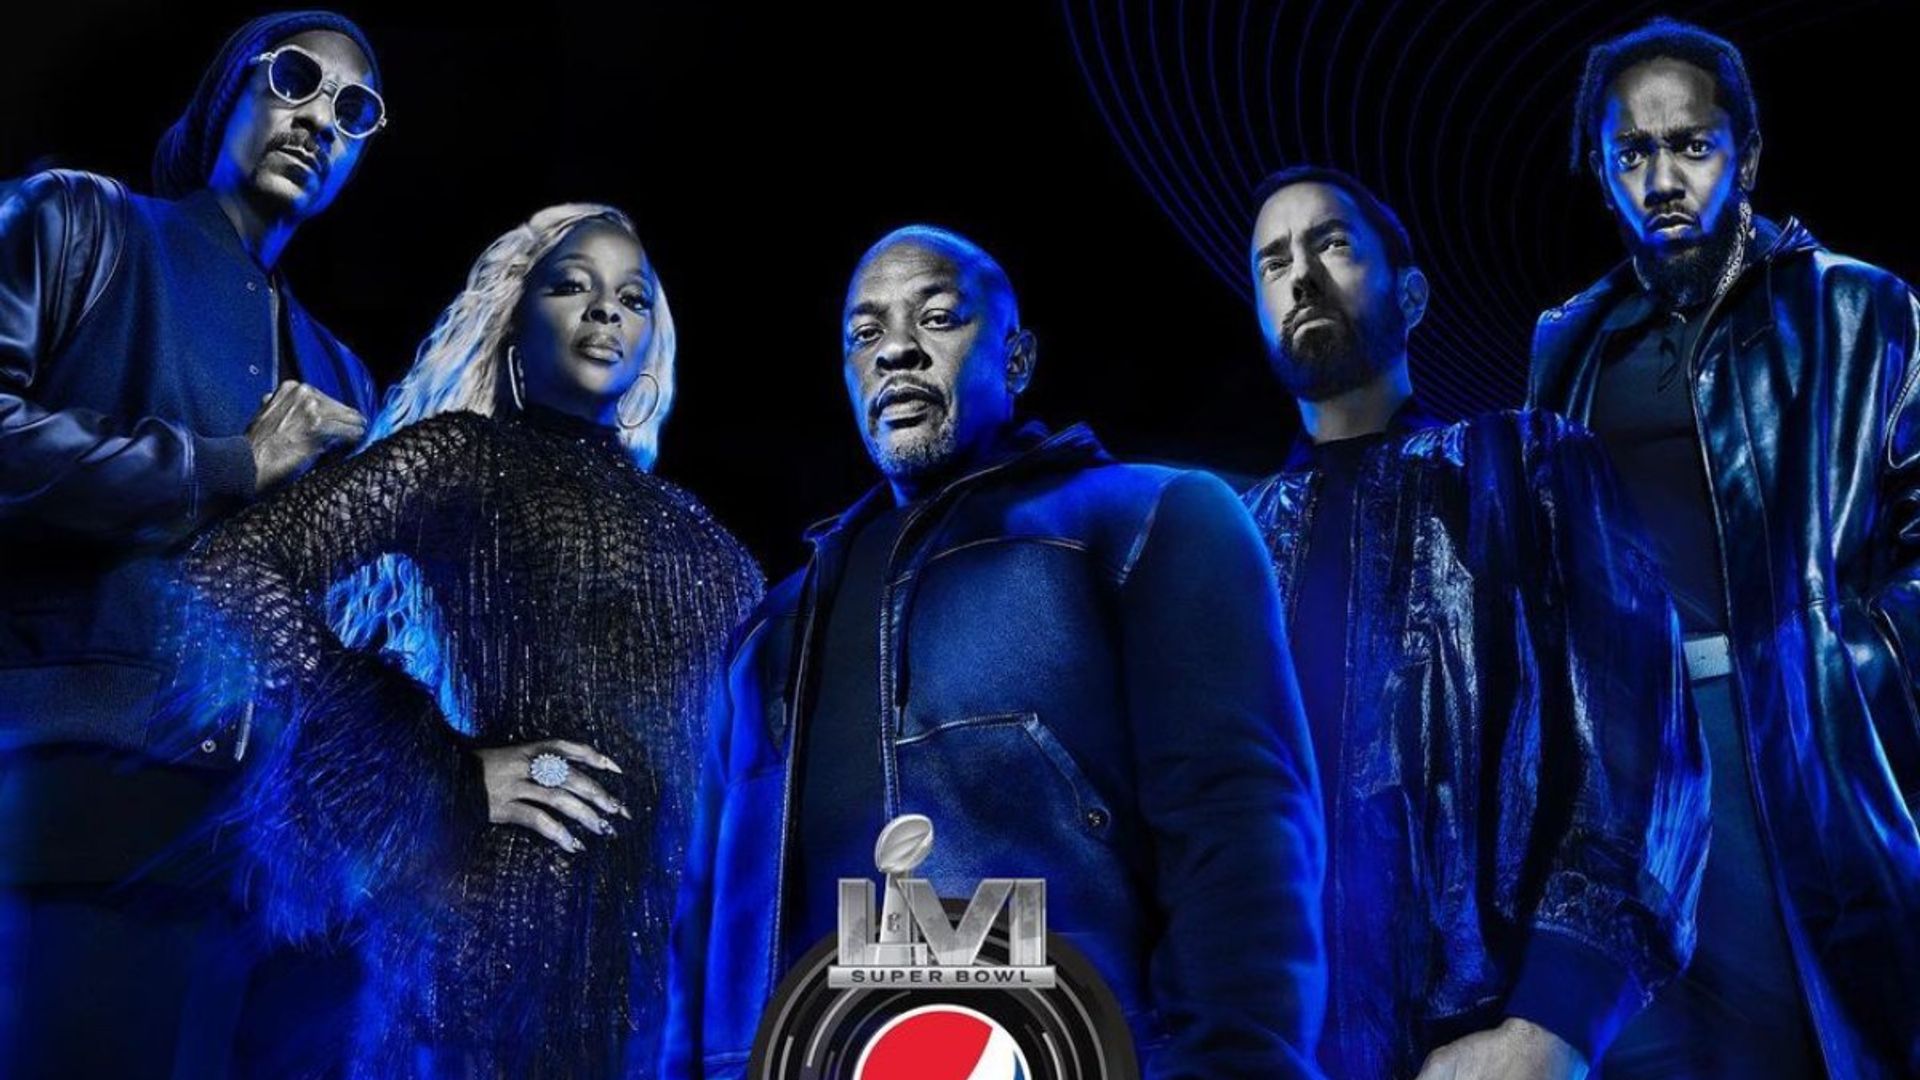 Eminem, Dr Dre, Mary J. Blige, Snoop Dogg and Kendrick Lamar to headline Super Bowl halftime performance - fans react | HELLO!